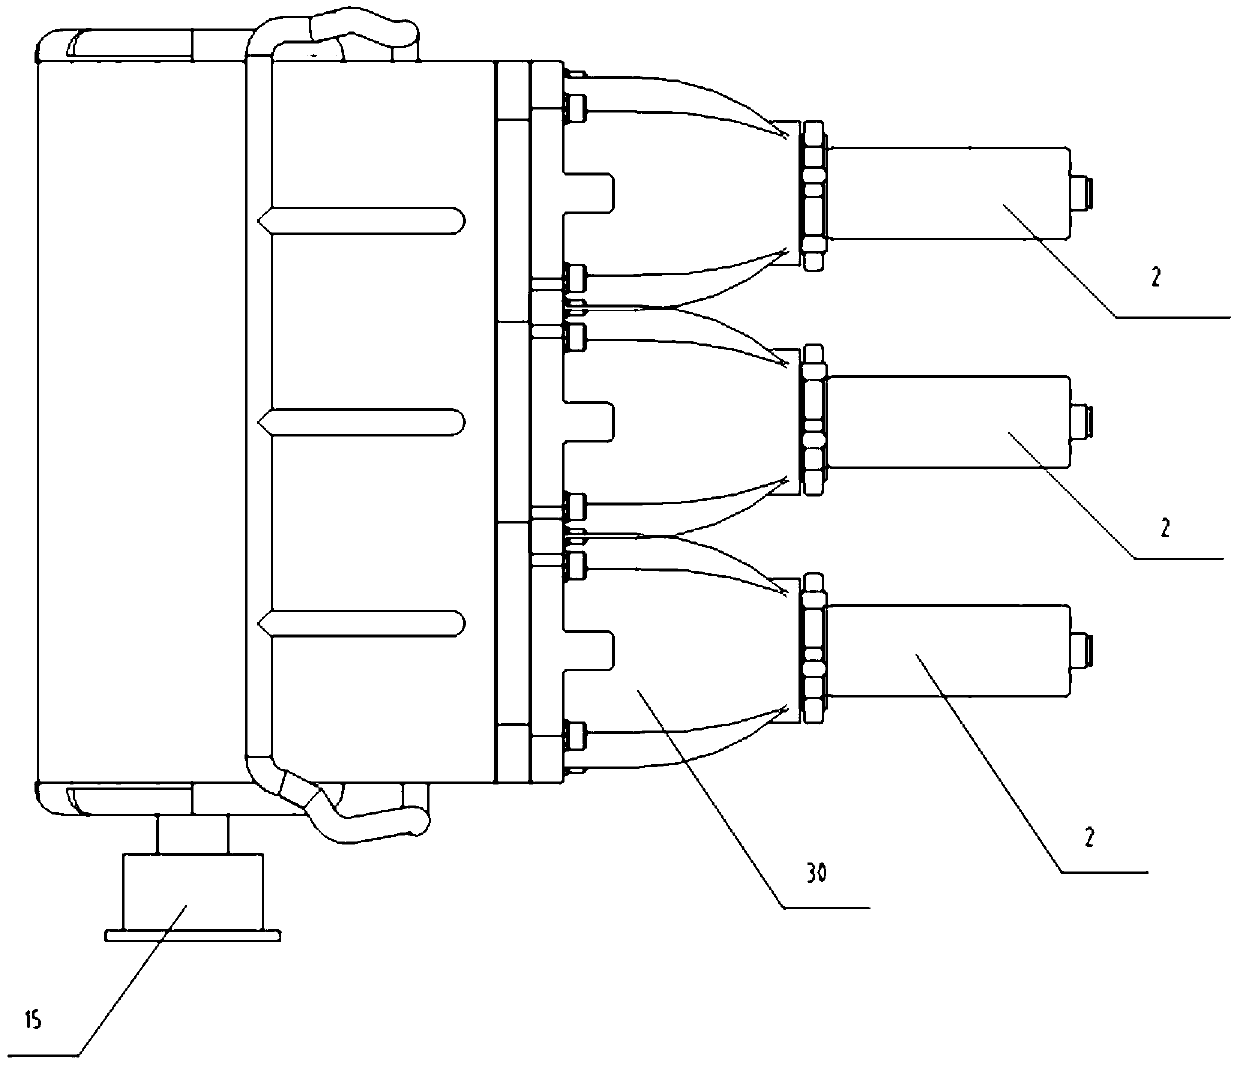 Plunger pump used for pumping ultralow-temperature liquid nitrogen